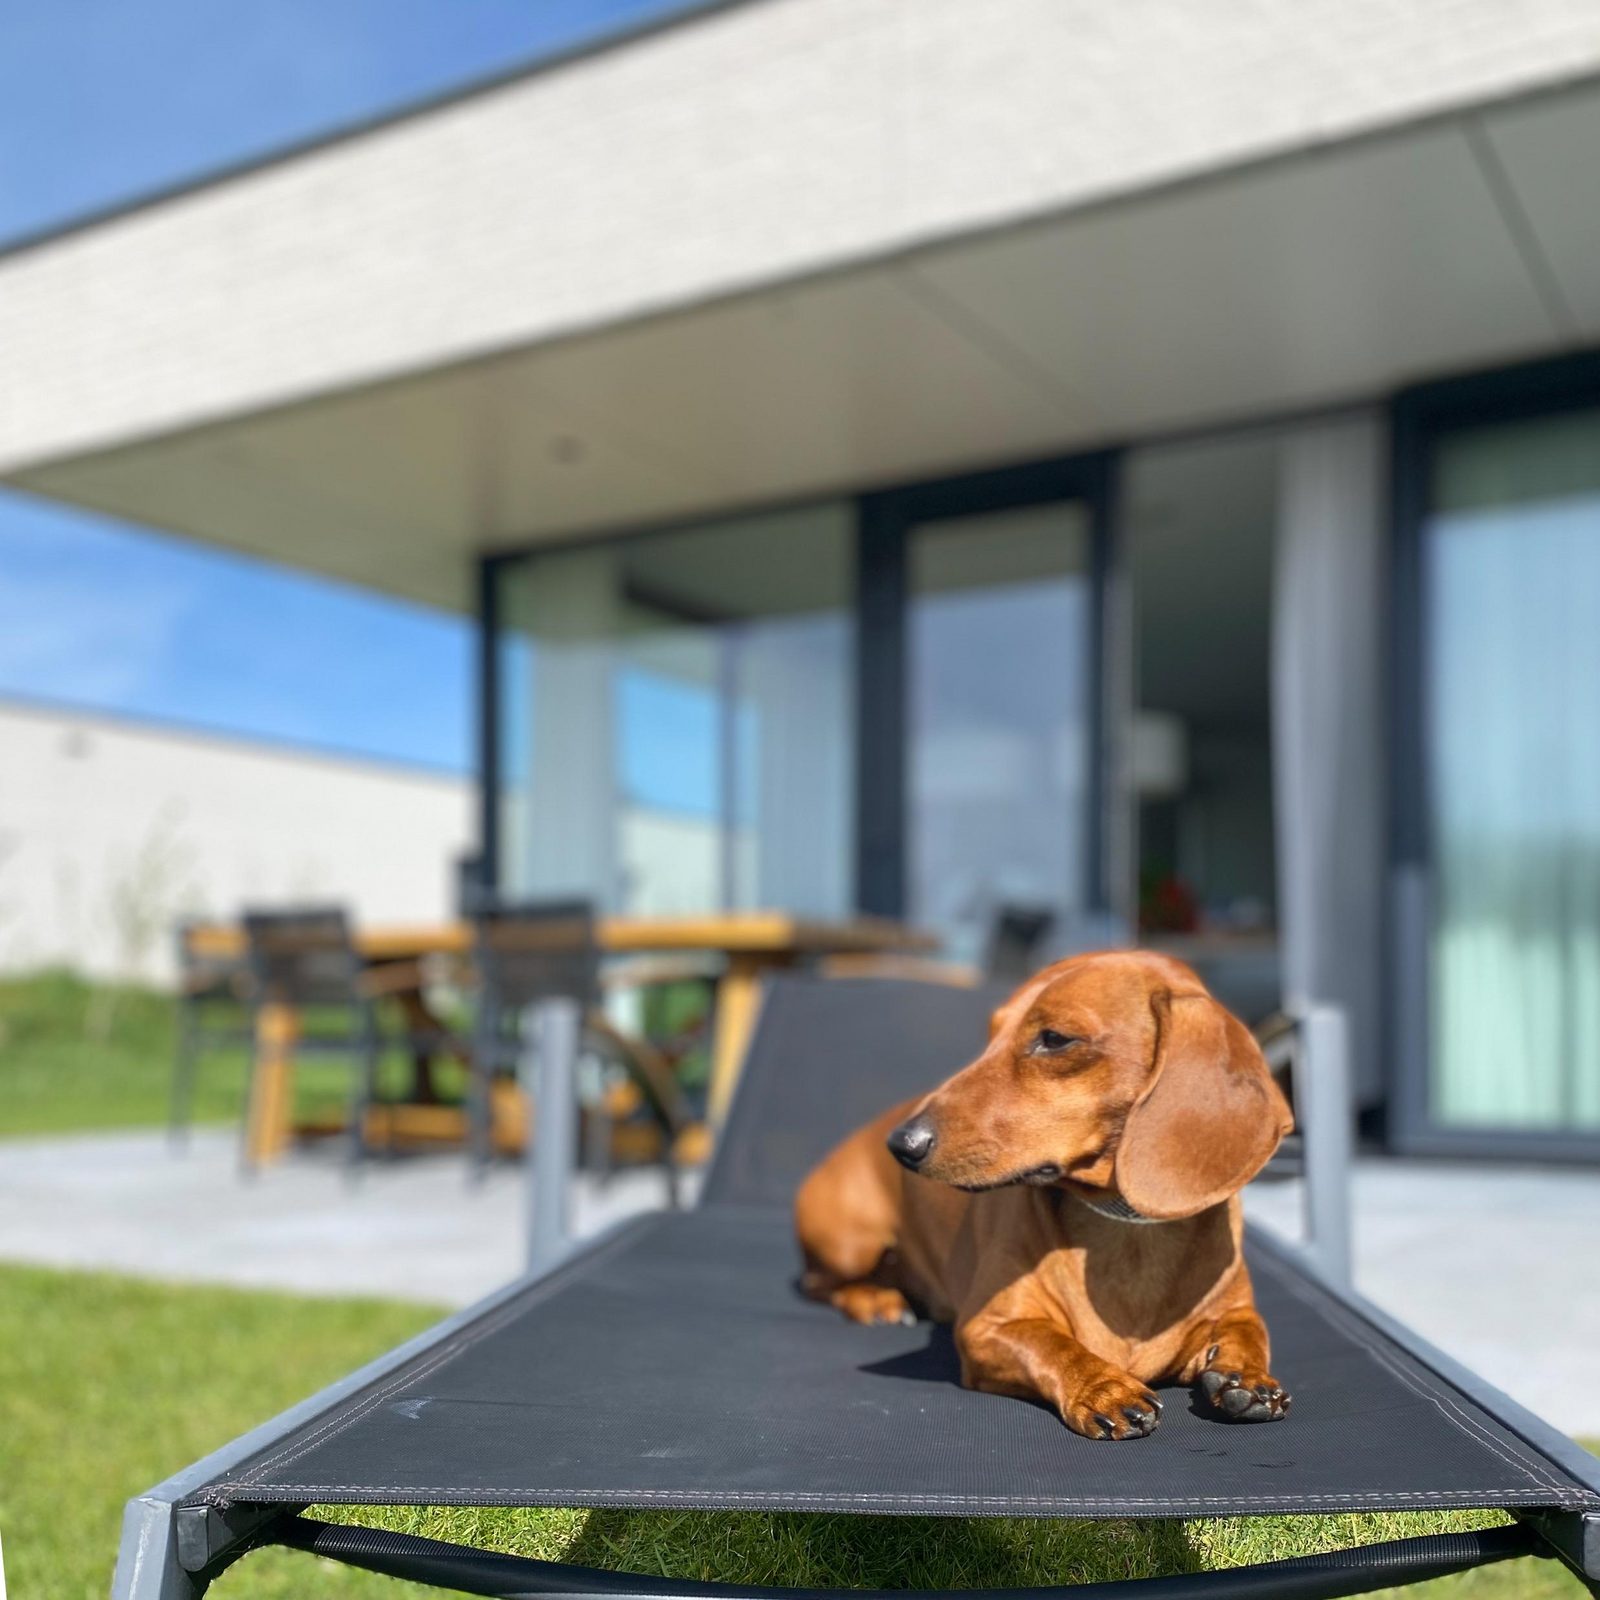 Holiday villa with dog